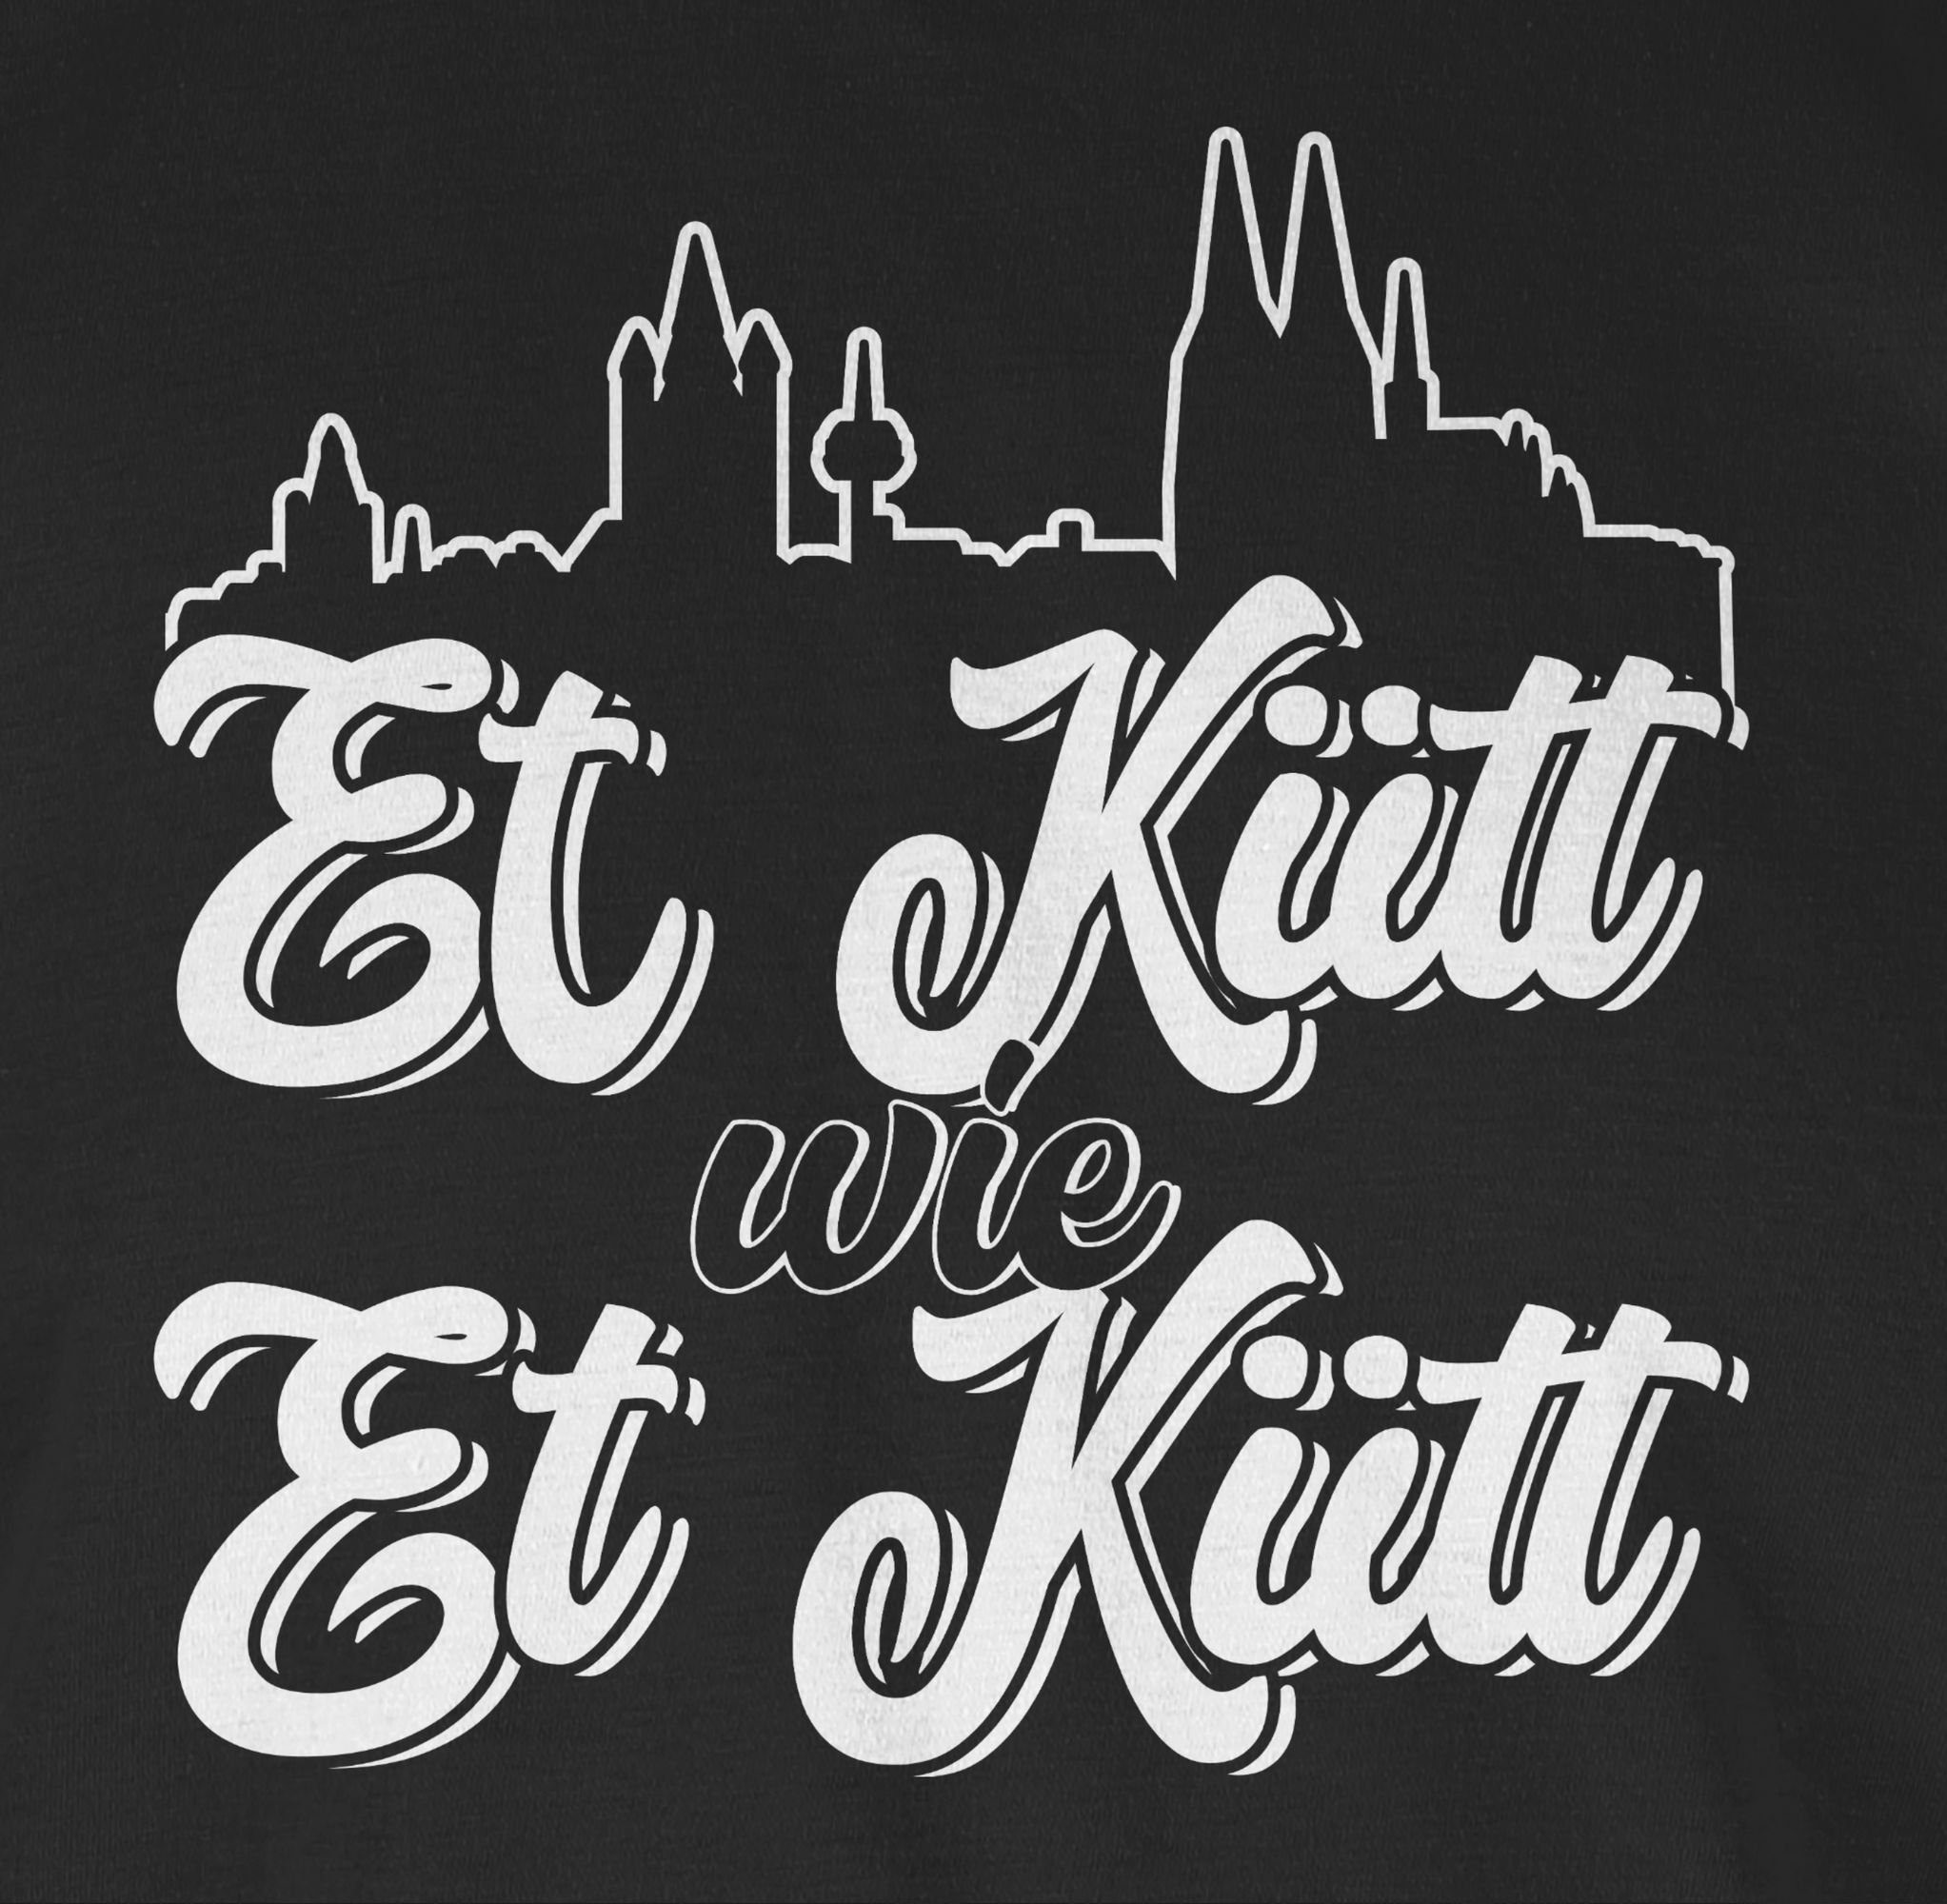 02 Schwarz Wie Et Et Kütt Shirtracer Karneval Kütt Outfit T-Shirt